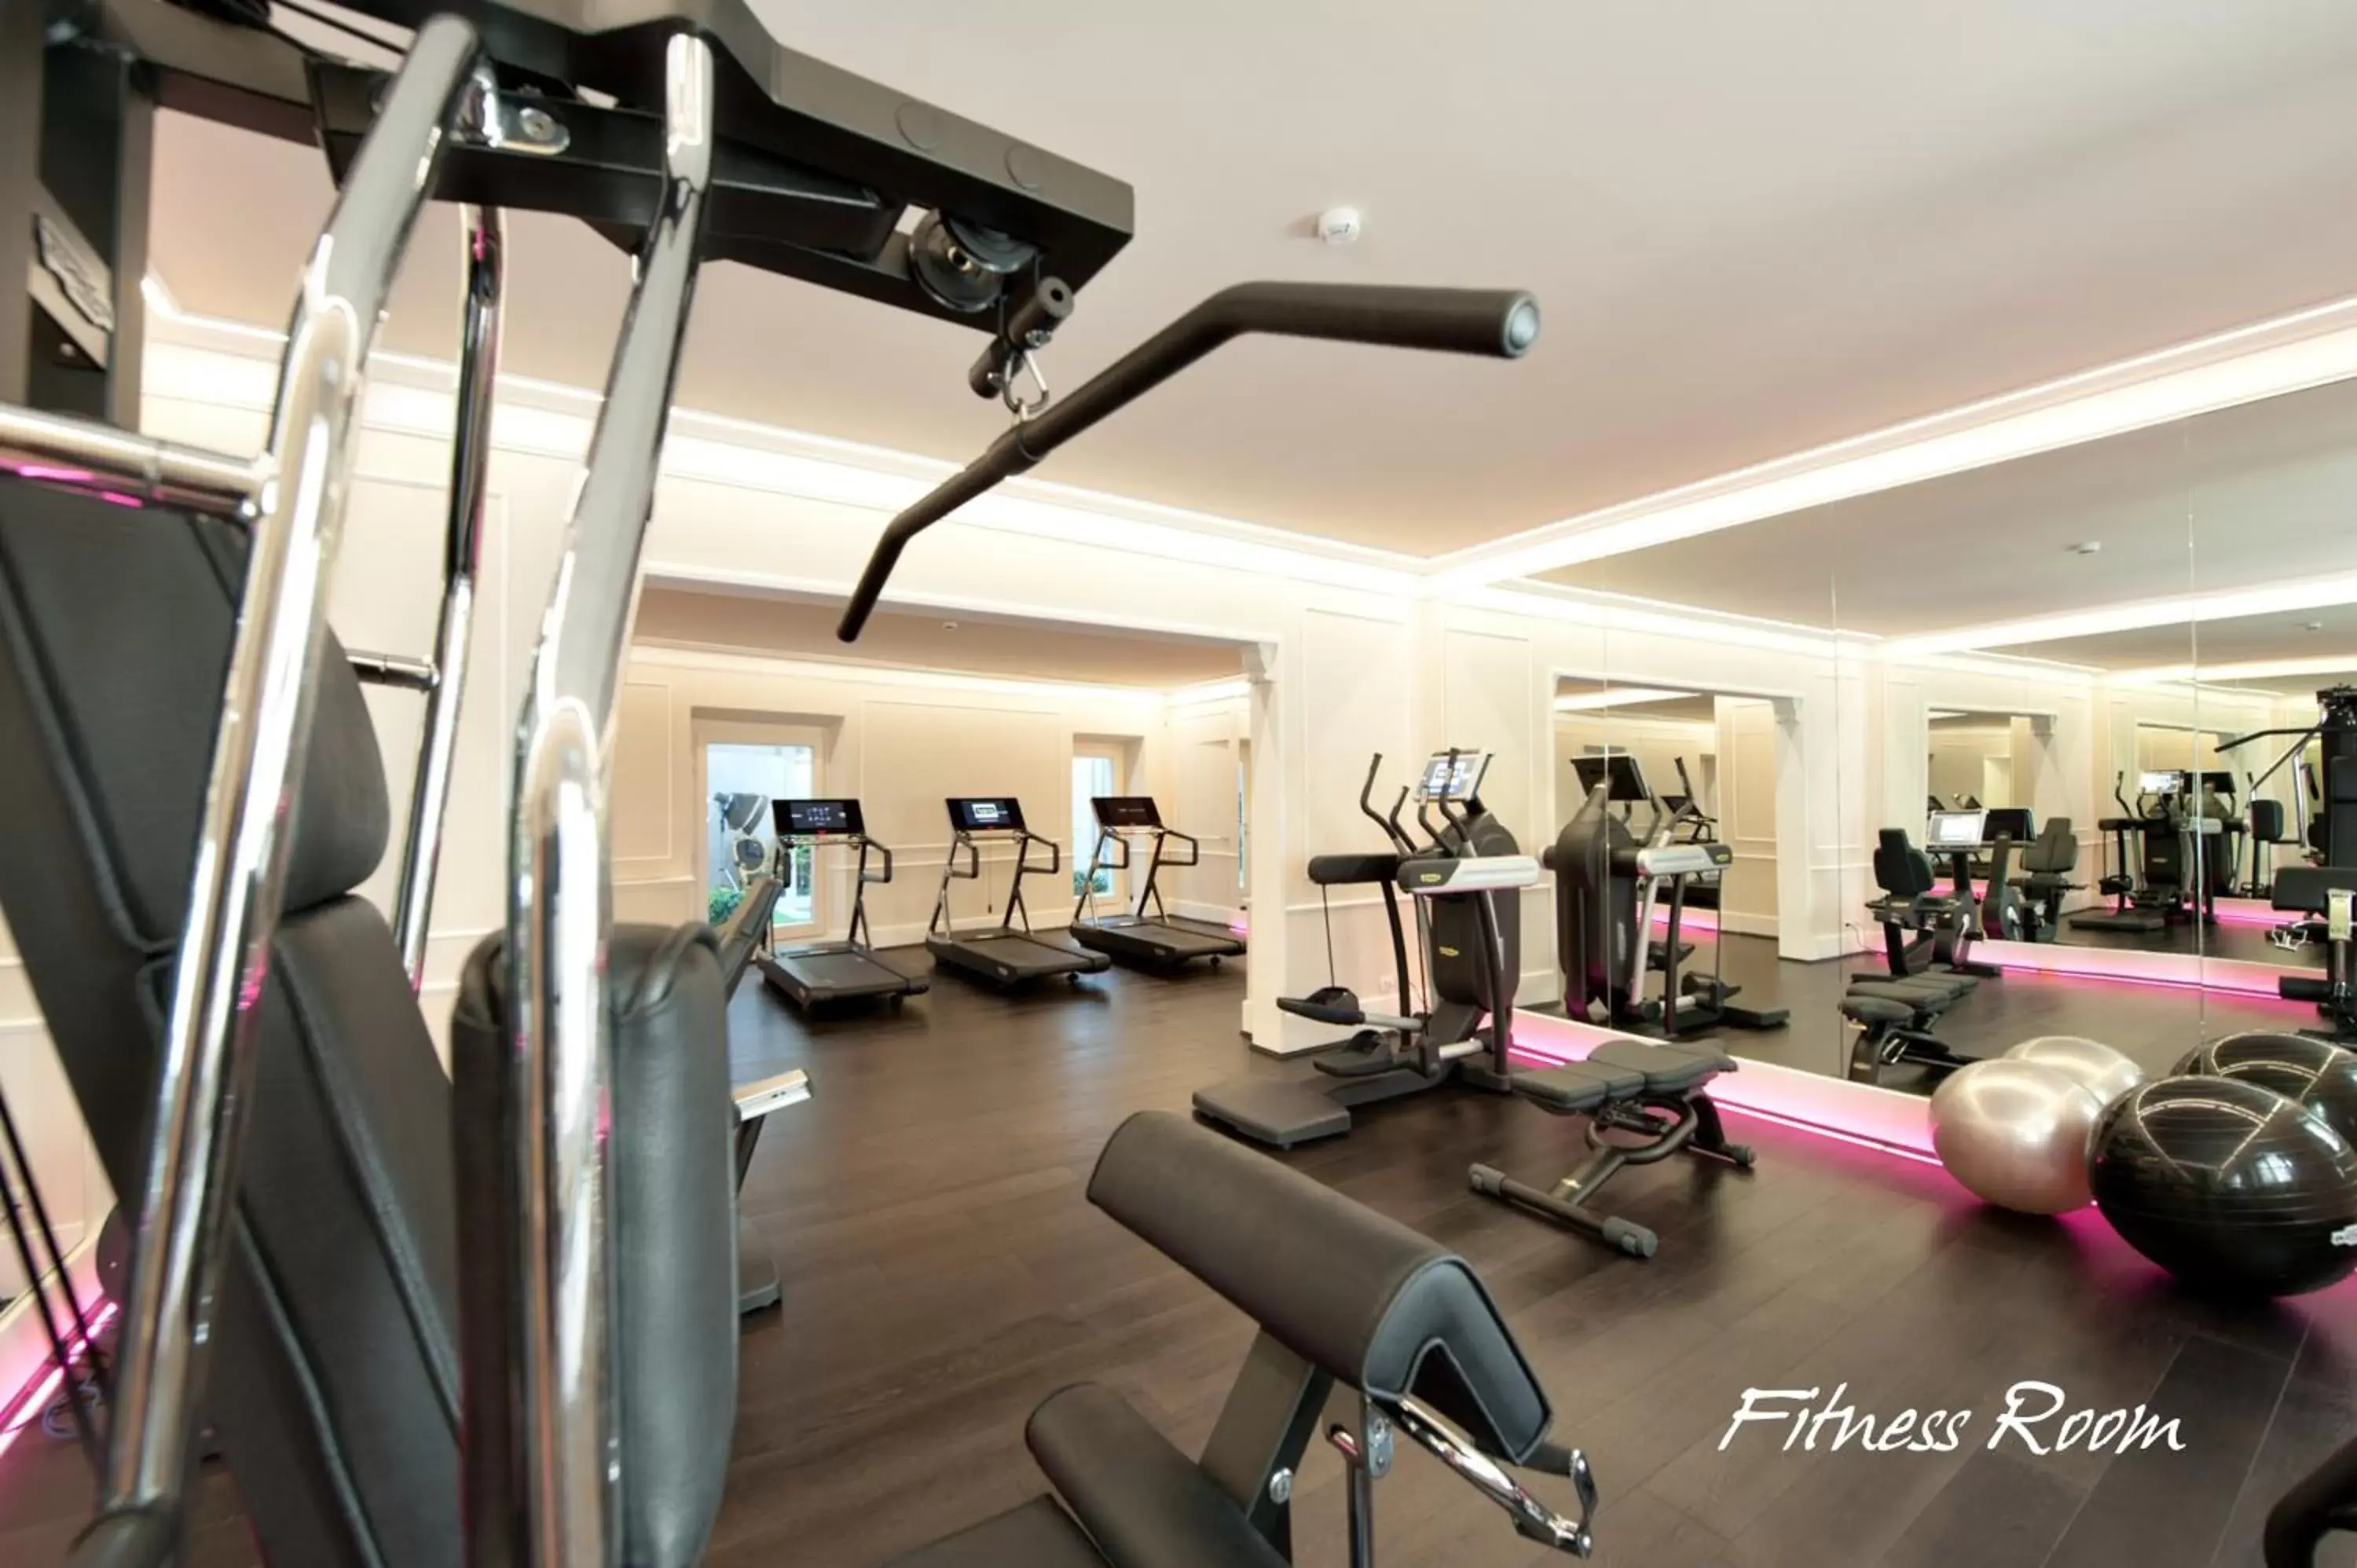 Fitness centre/facilities, Fitness Center/Facilities in Brunelleschi Hotel